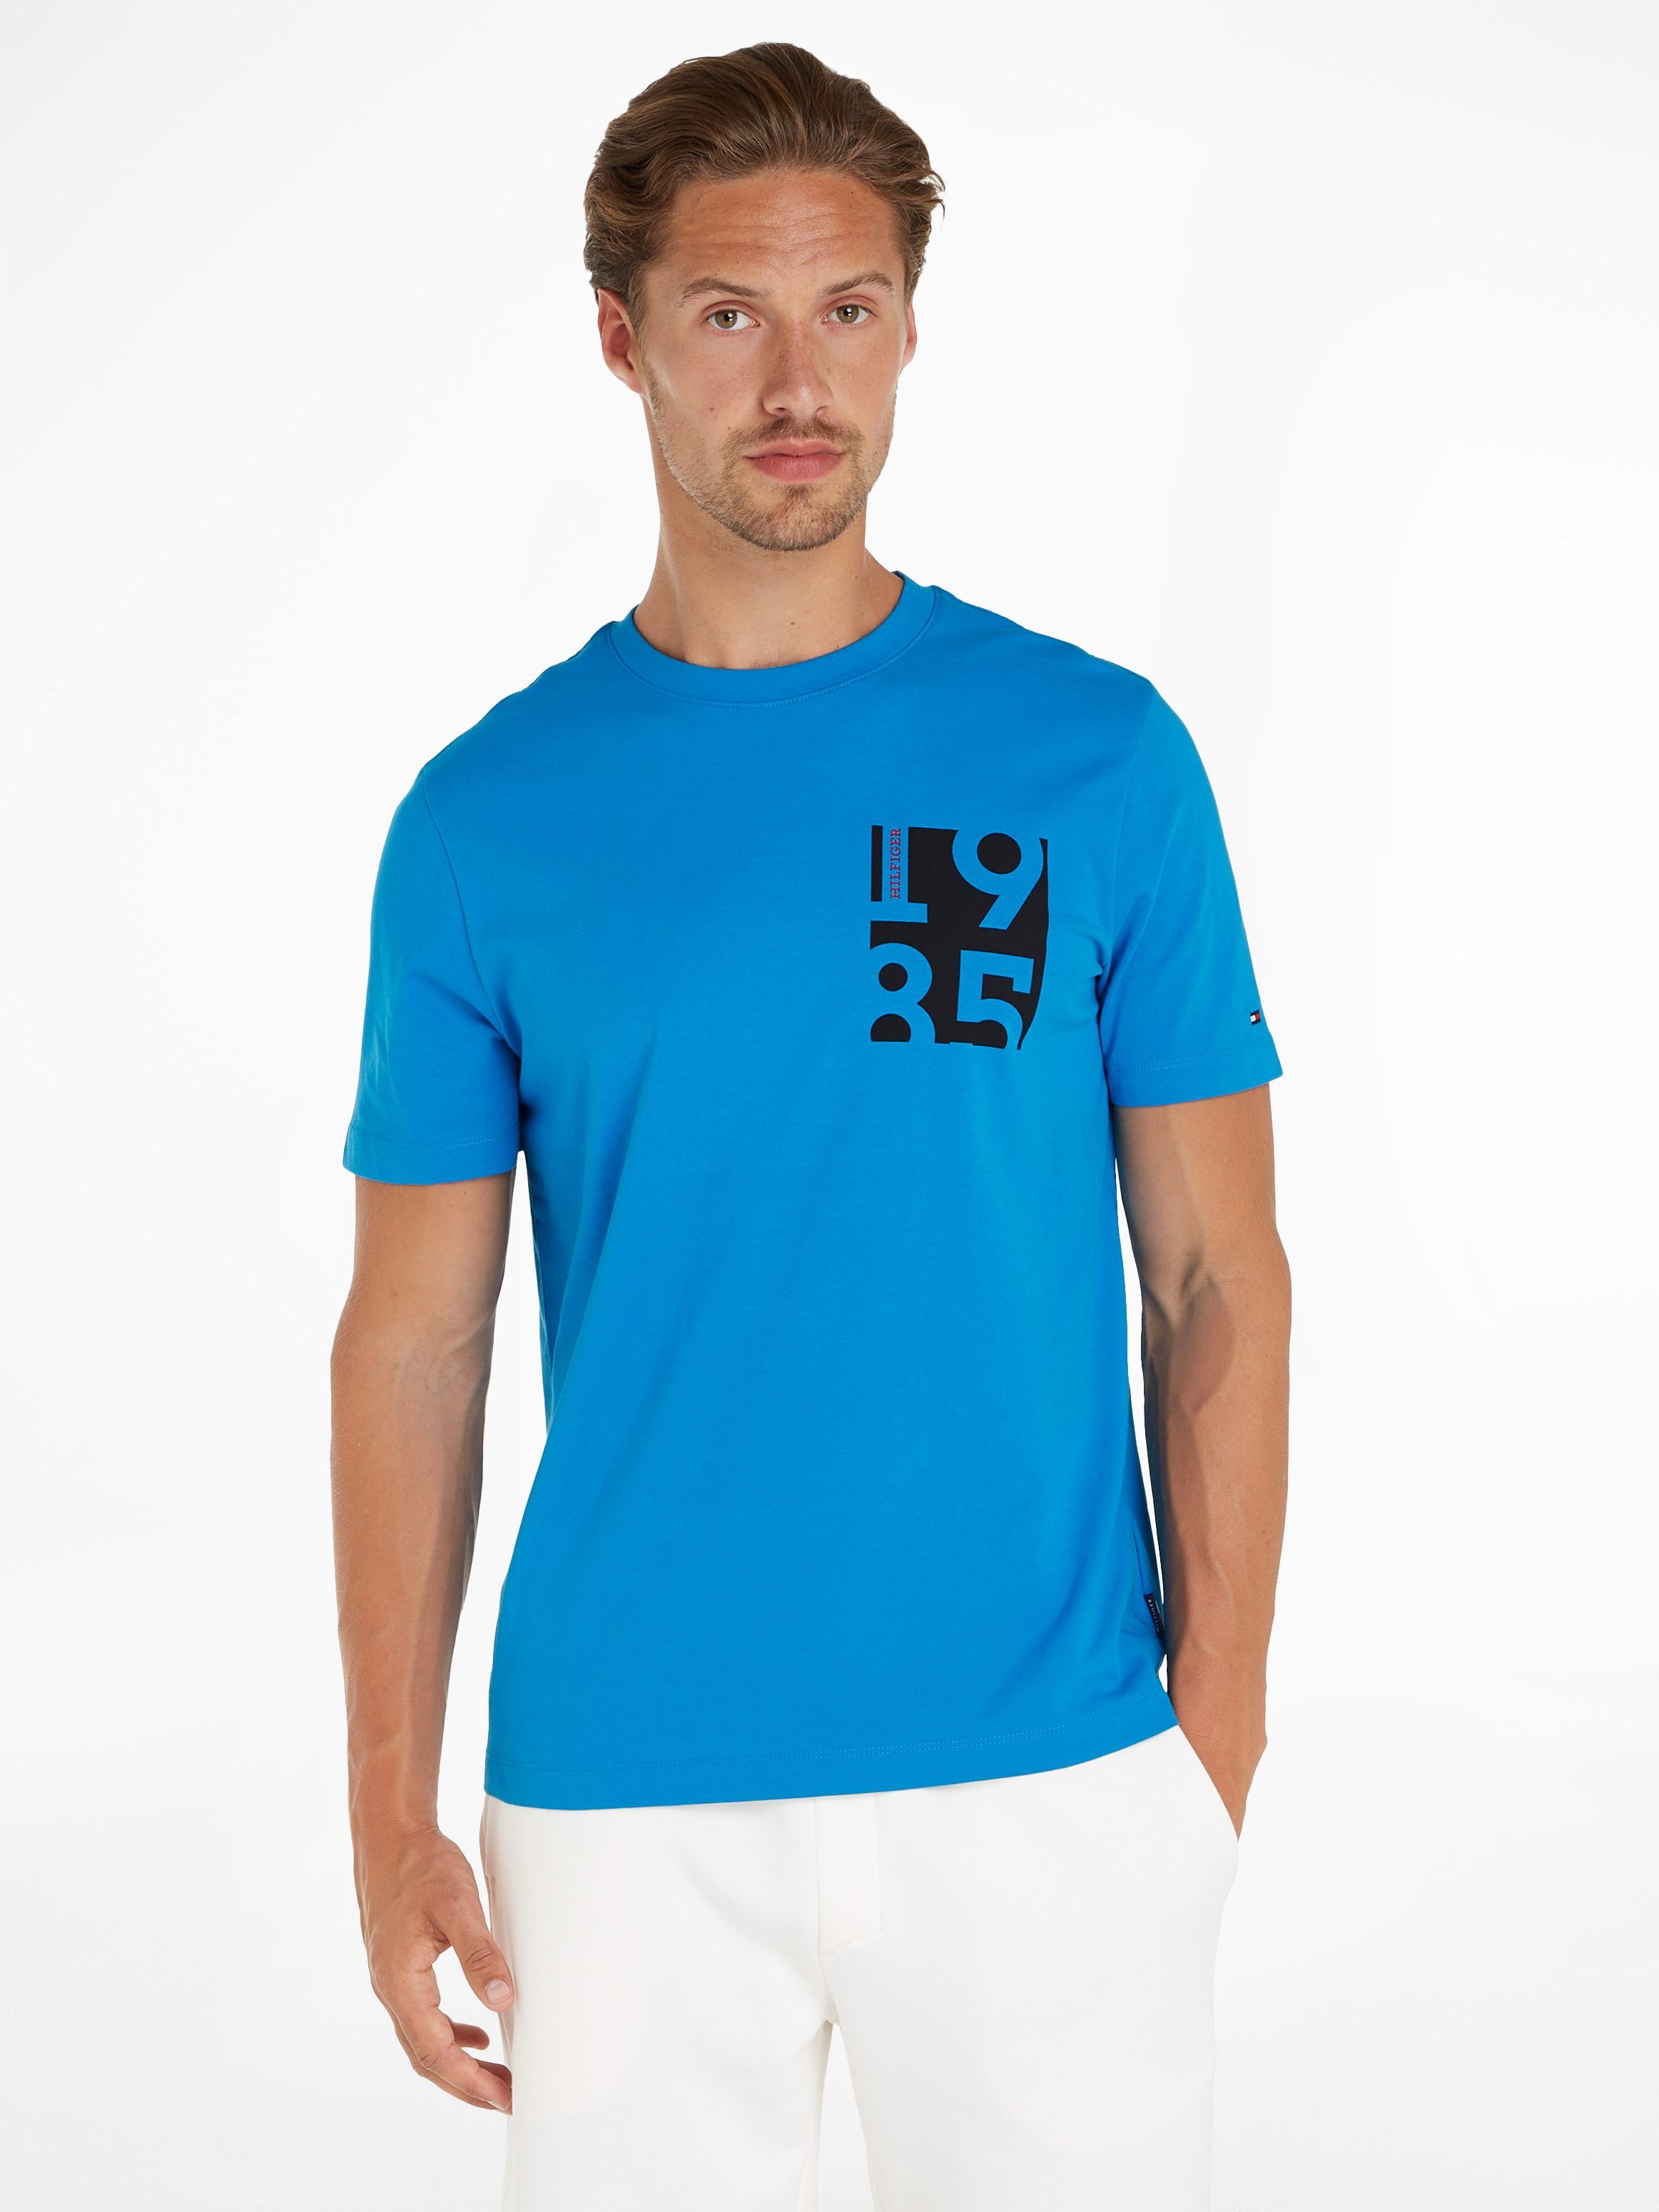 T-Shirt Aqua CHEST Hilfiger Cerulean PRINT Tommy TEE